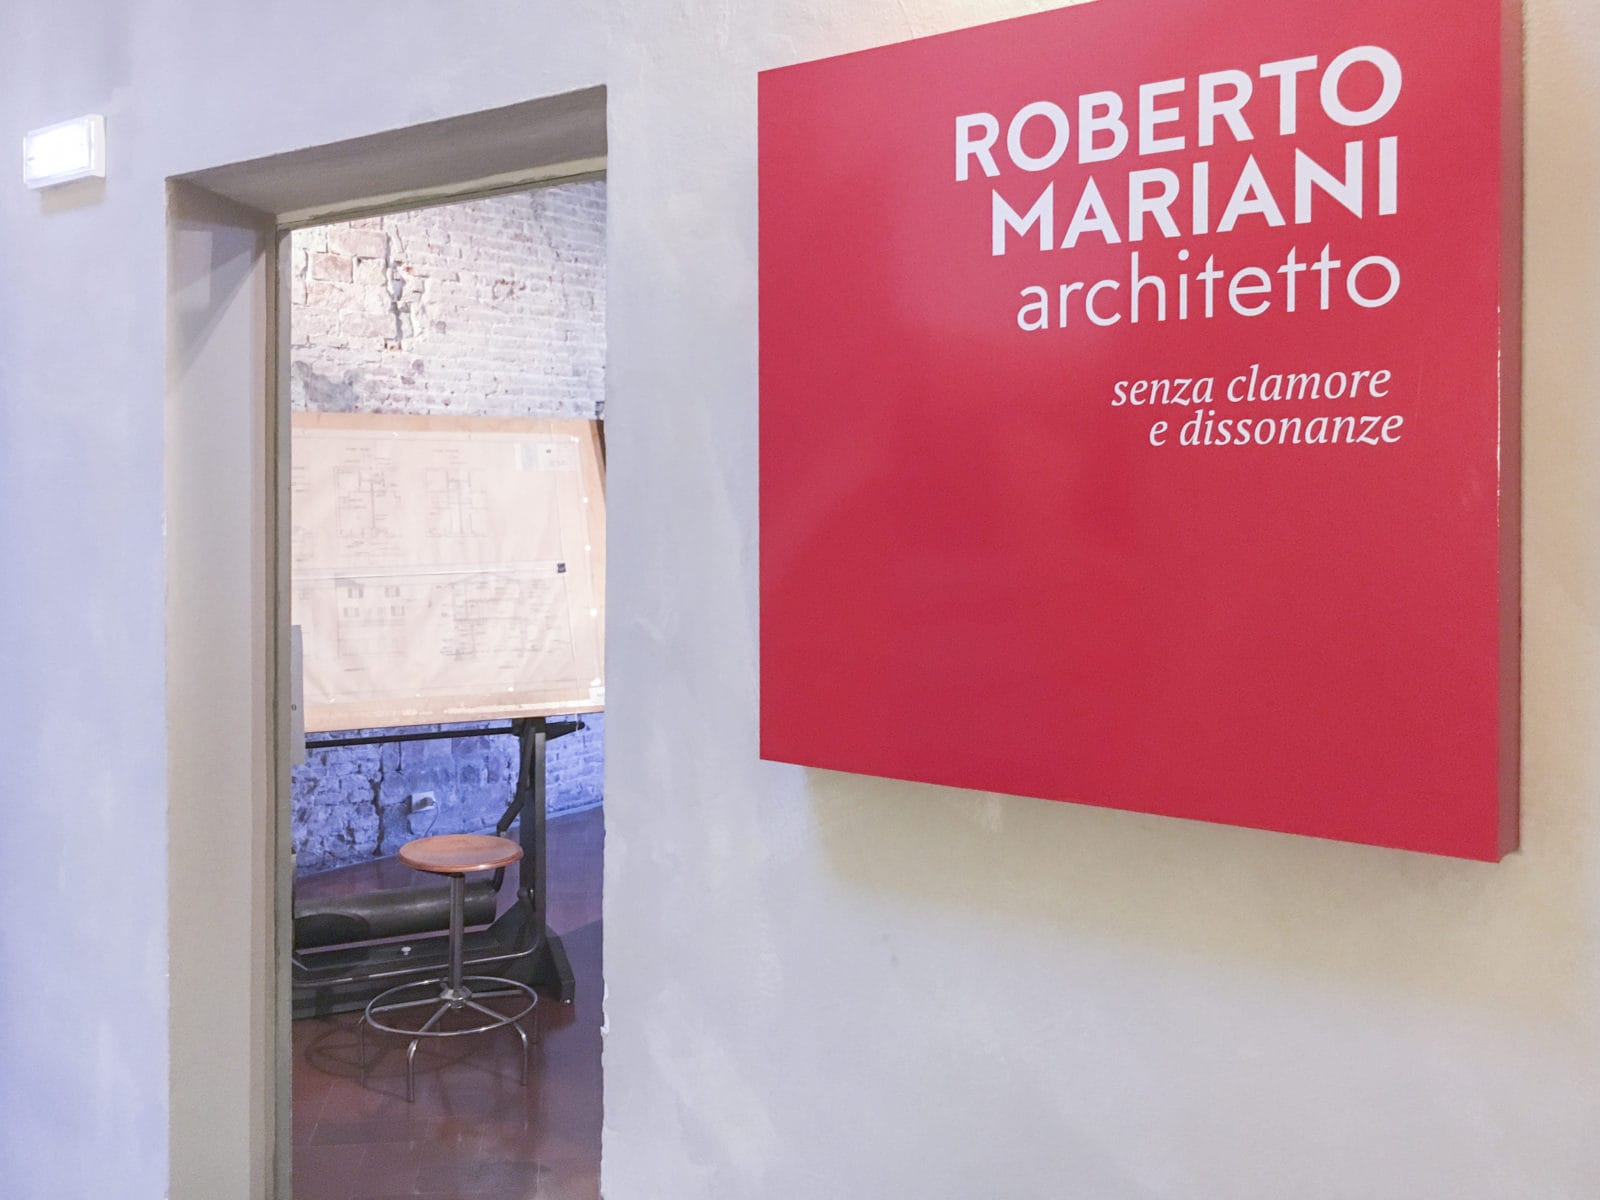 Roberto Mariani Architetto exhibition setup